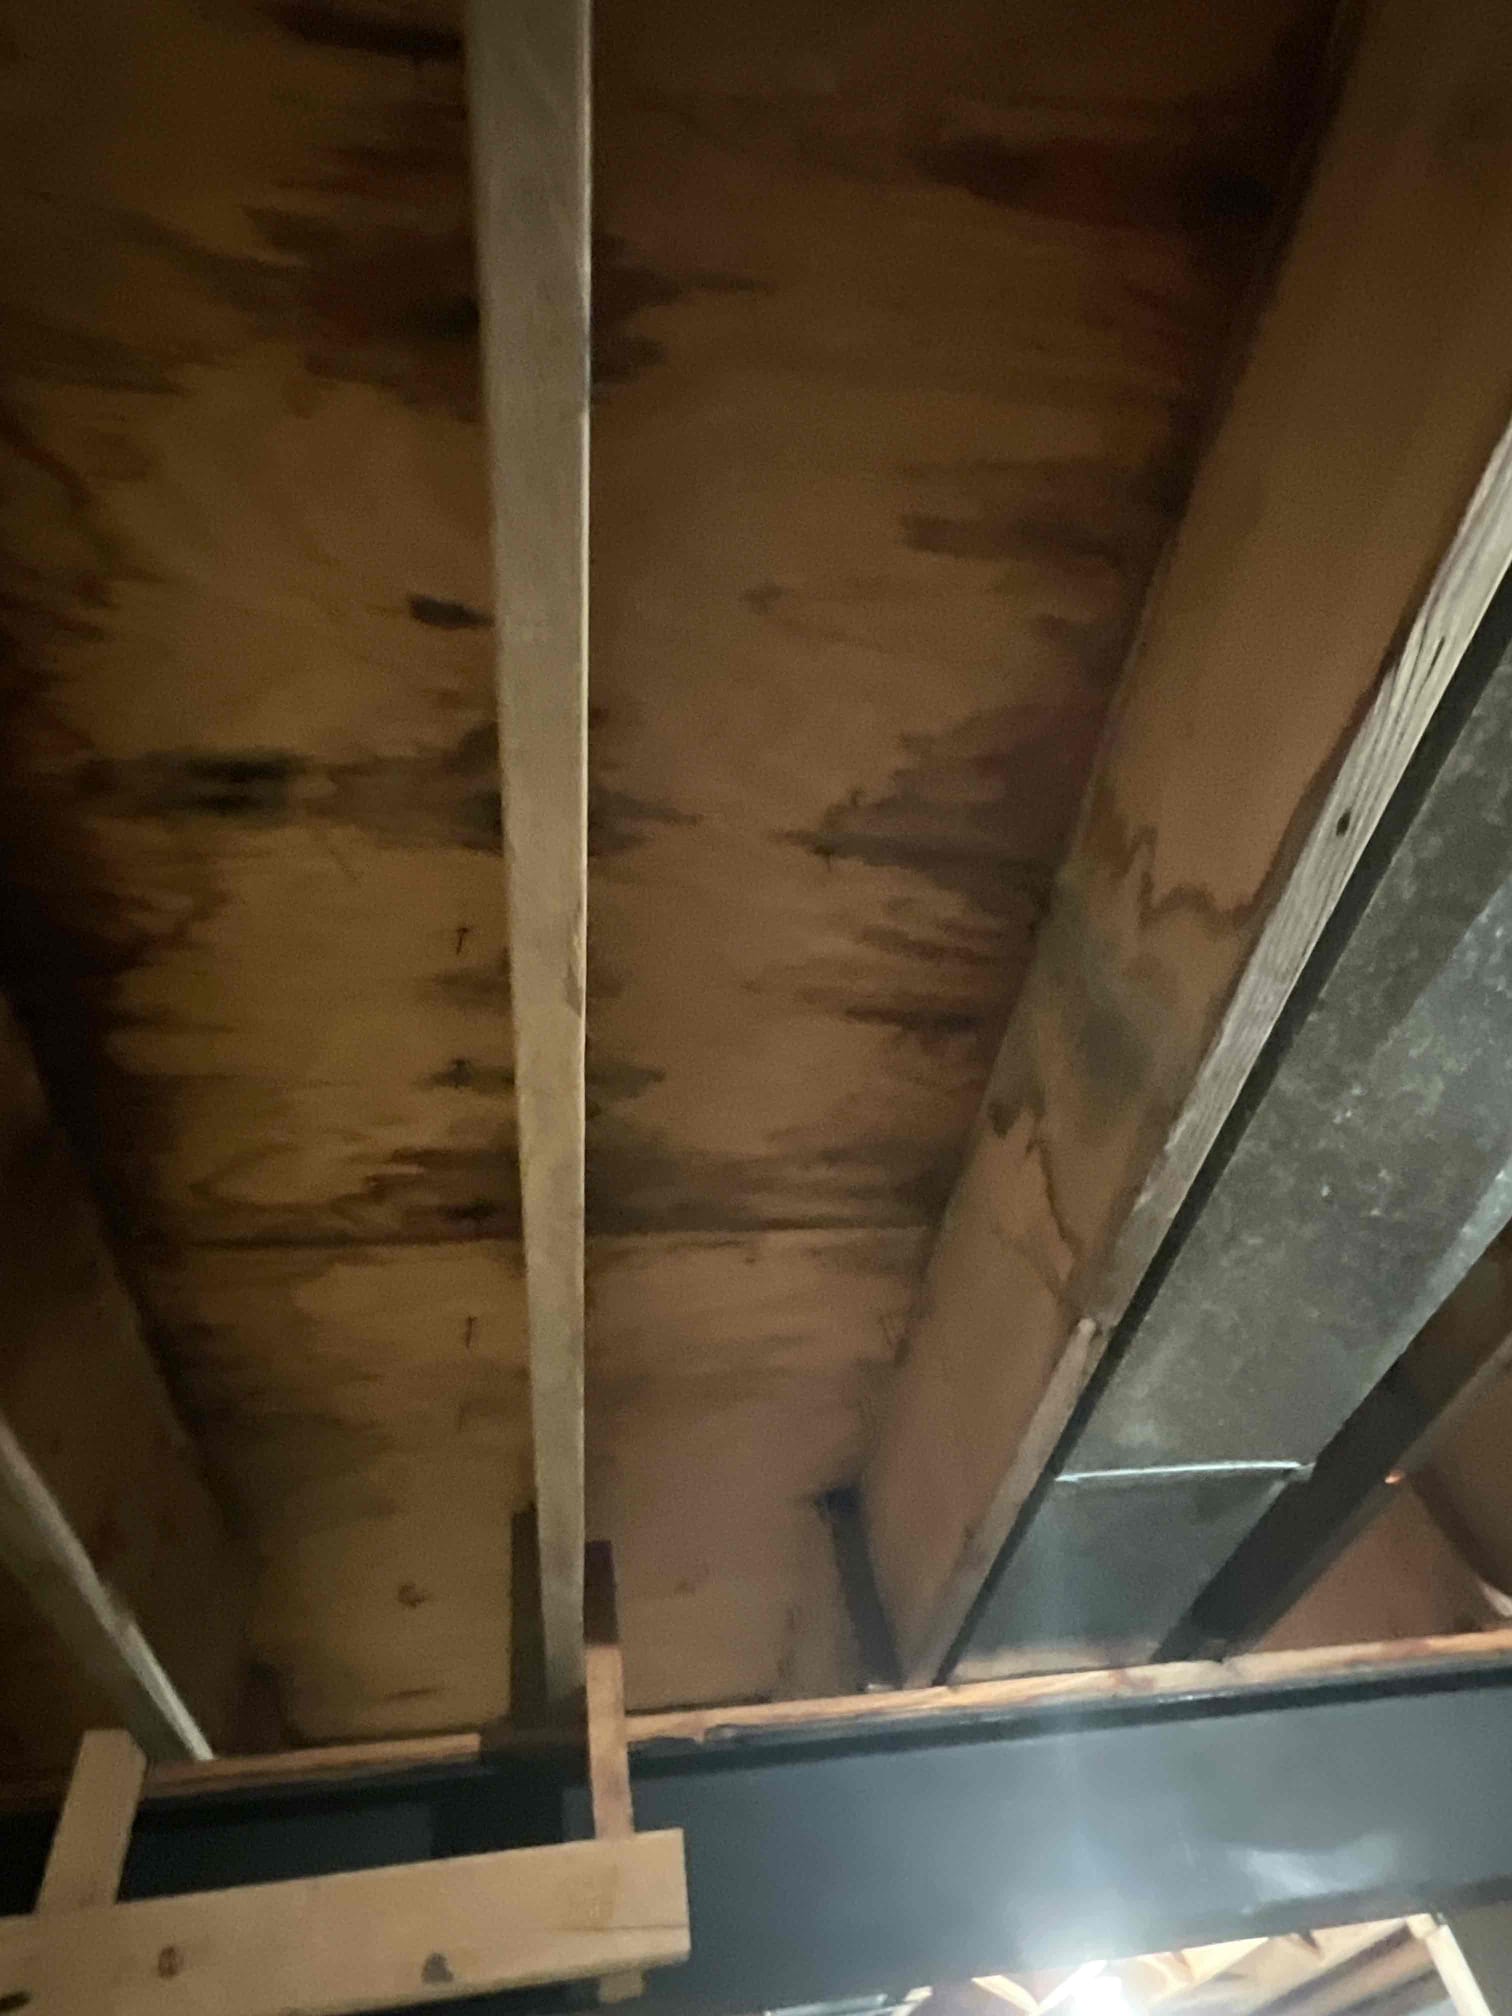 Wet Ceiling due to fridge leak